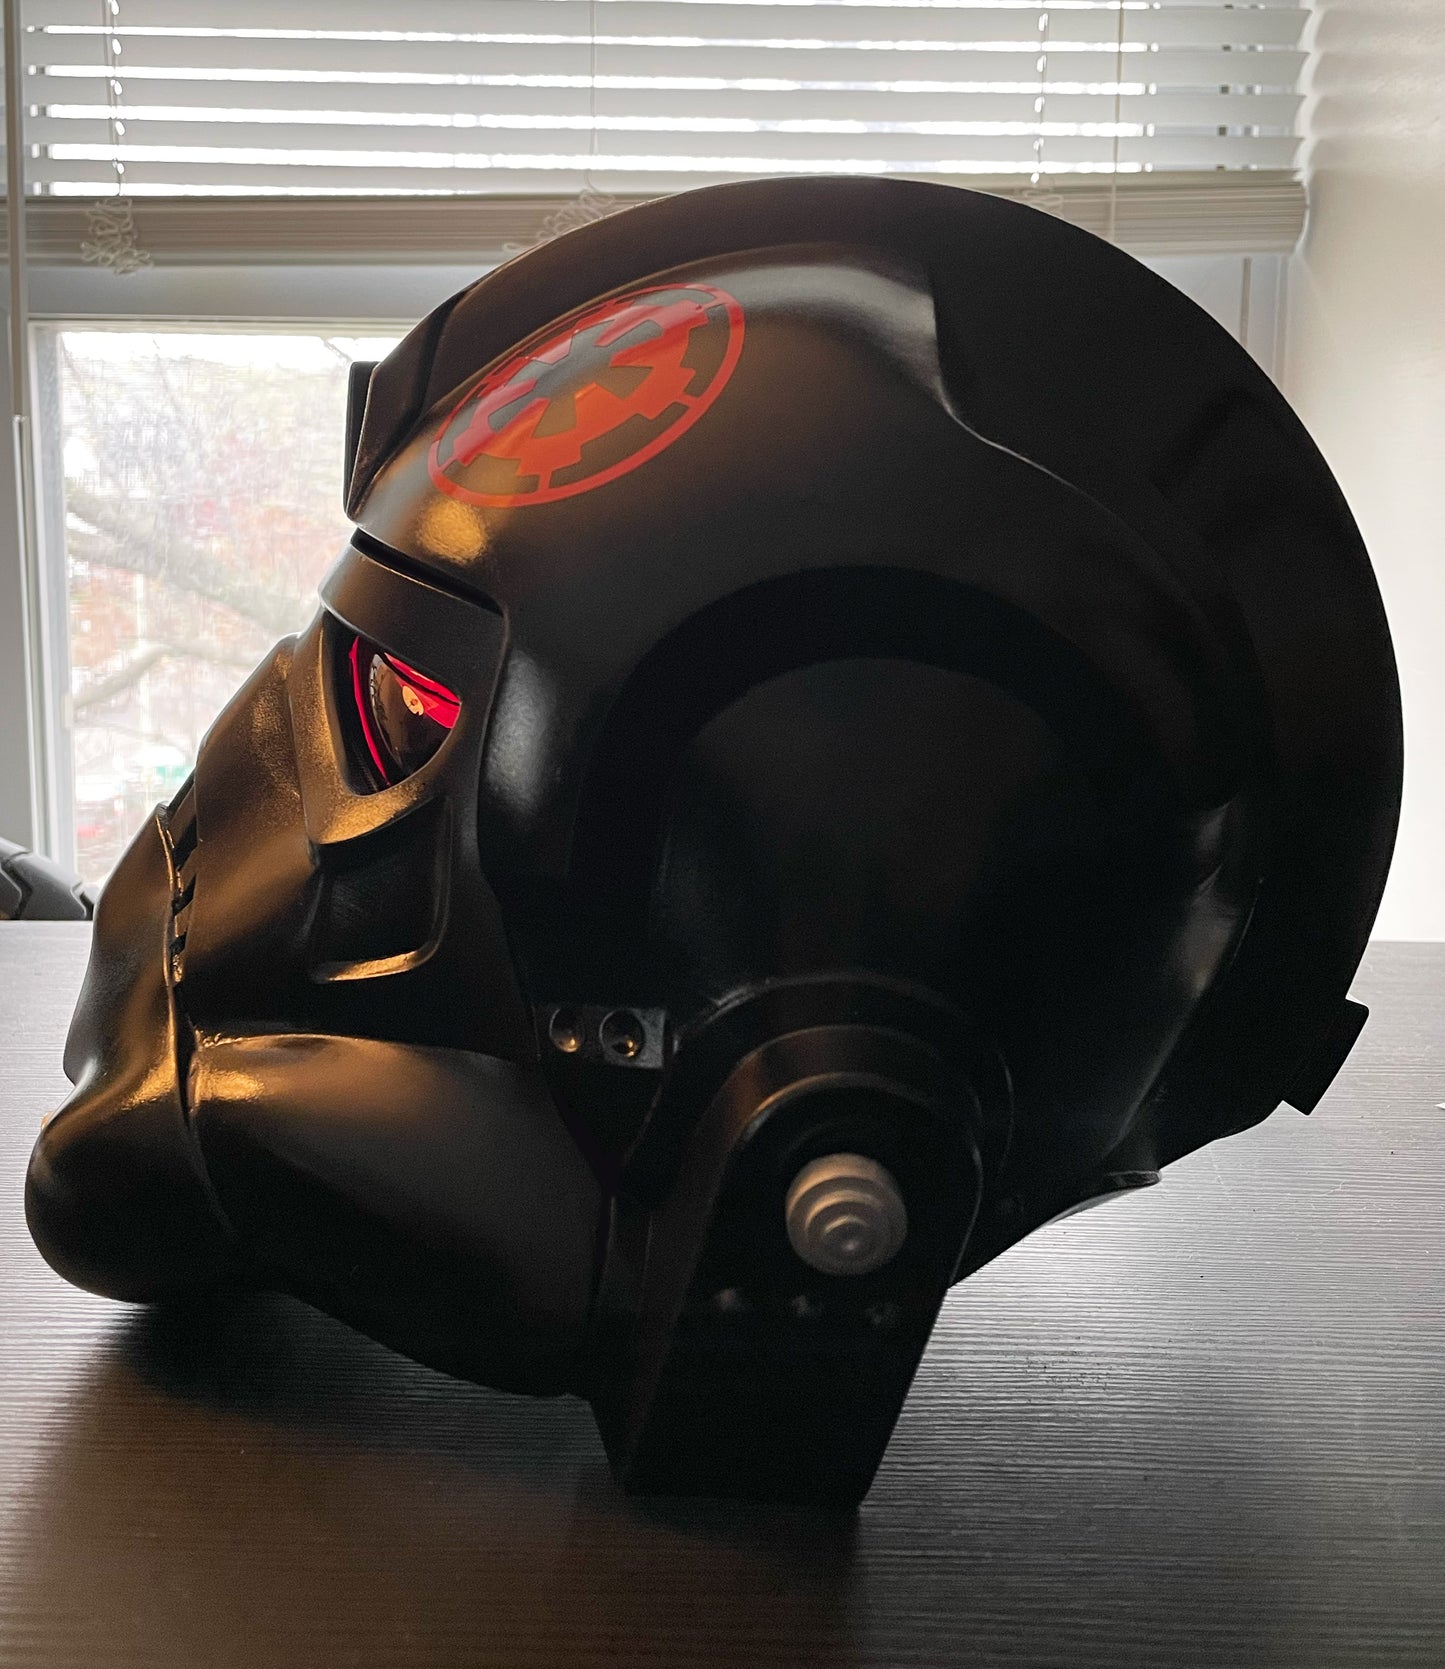 Commander Iden Versio Helmet - Inferno Squad (501st Approvable)